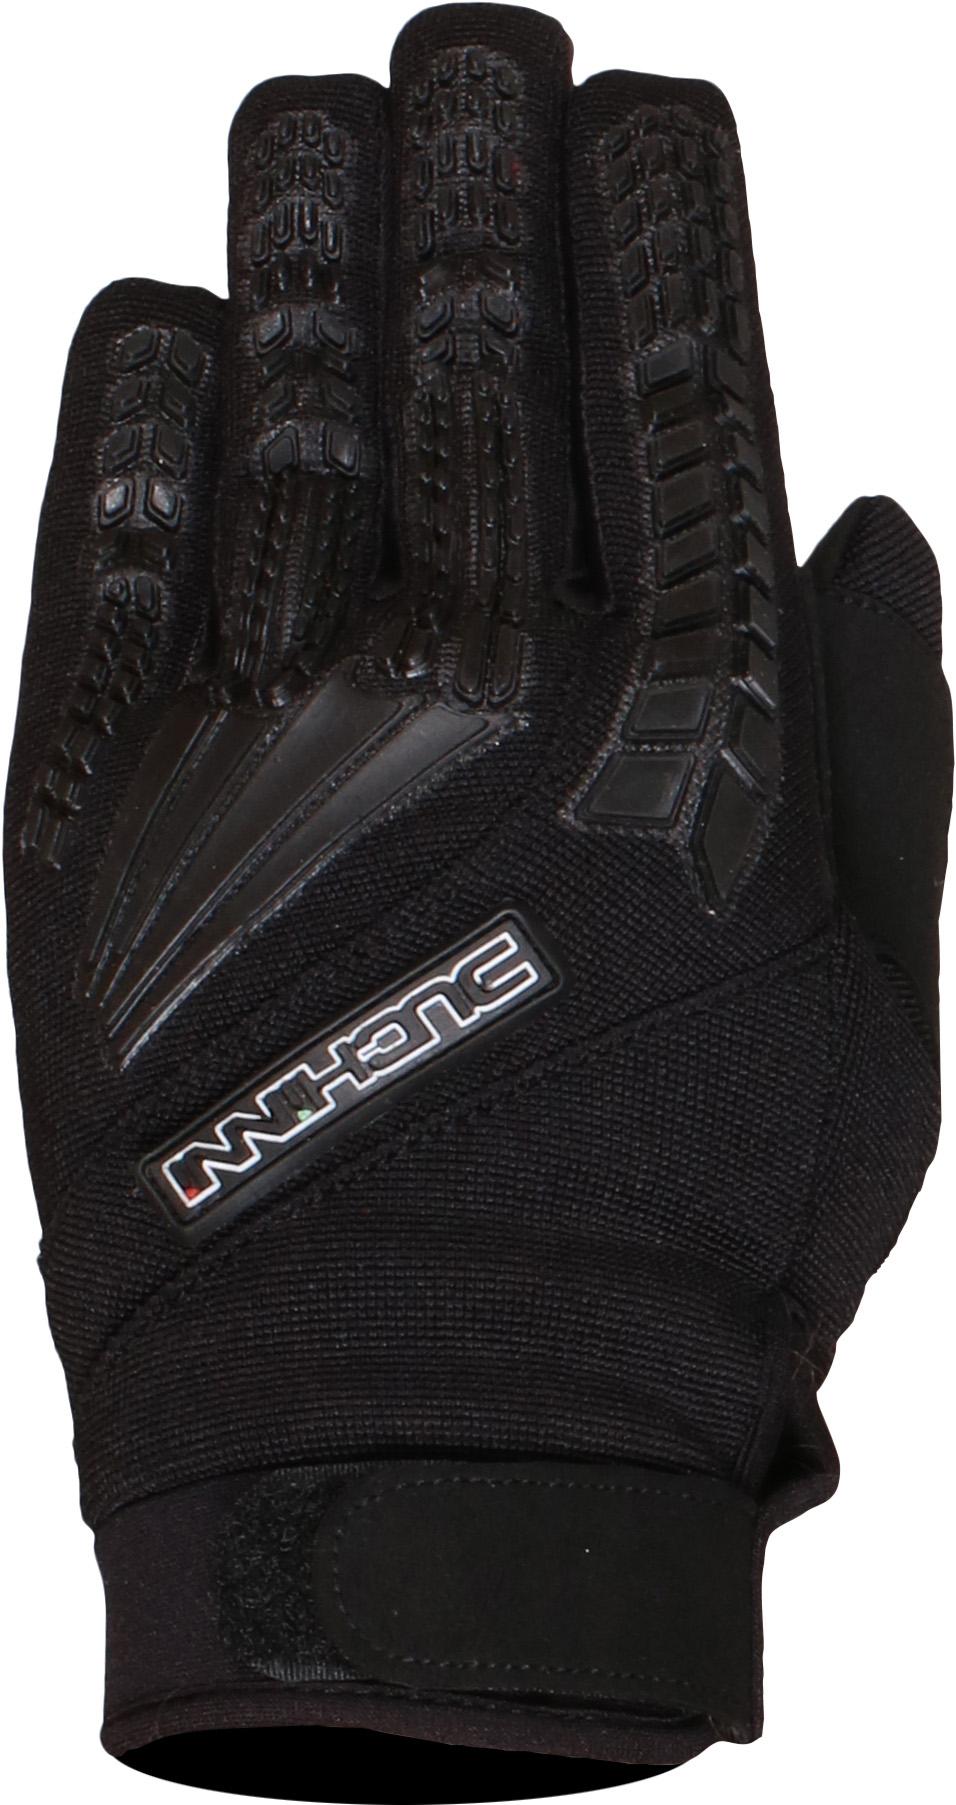 Duchinni Focus Motorcycle Gloves - Black, S